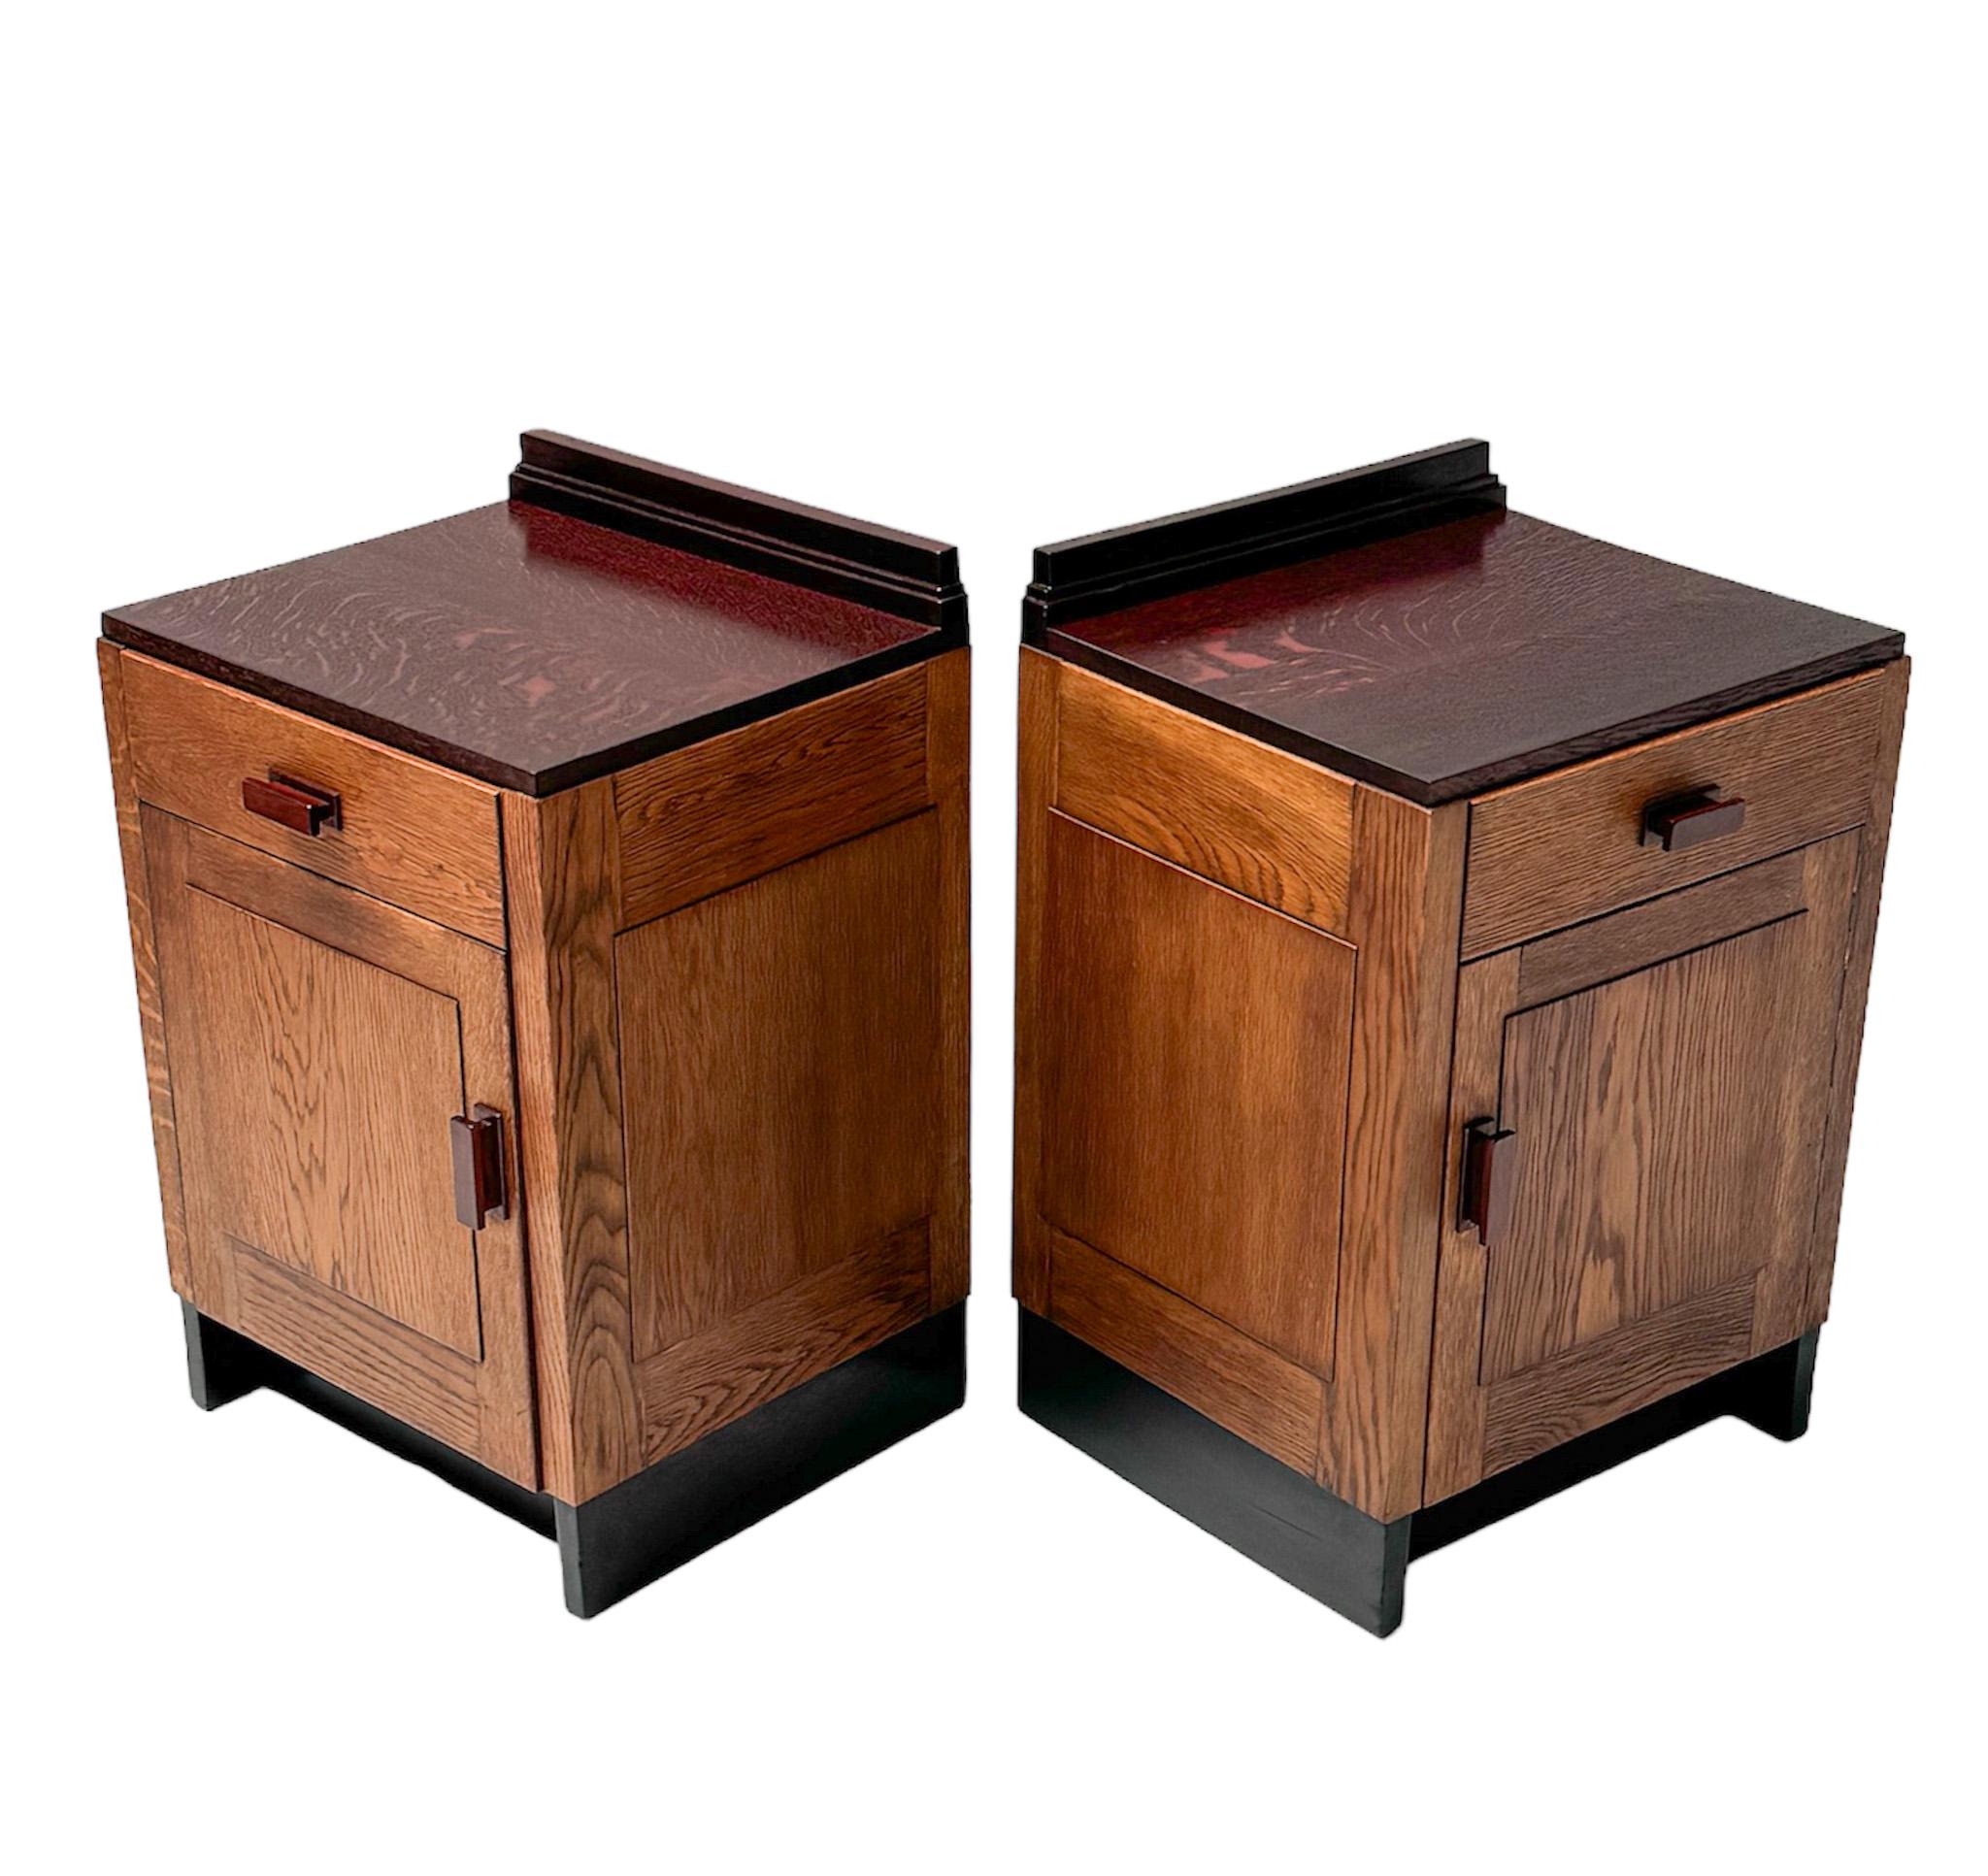 Two Oak Art Deco Modernist Nightstands or Bedside Tables, 1920s For Sale 3